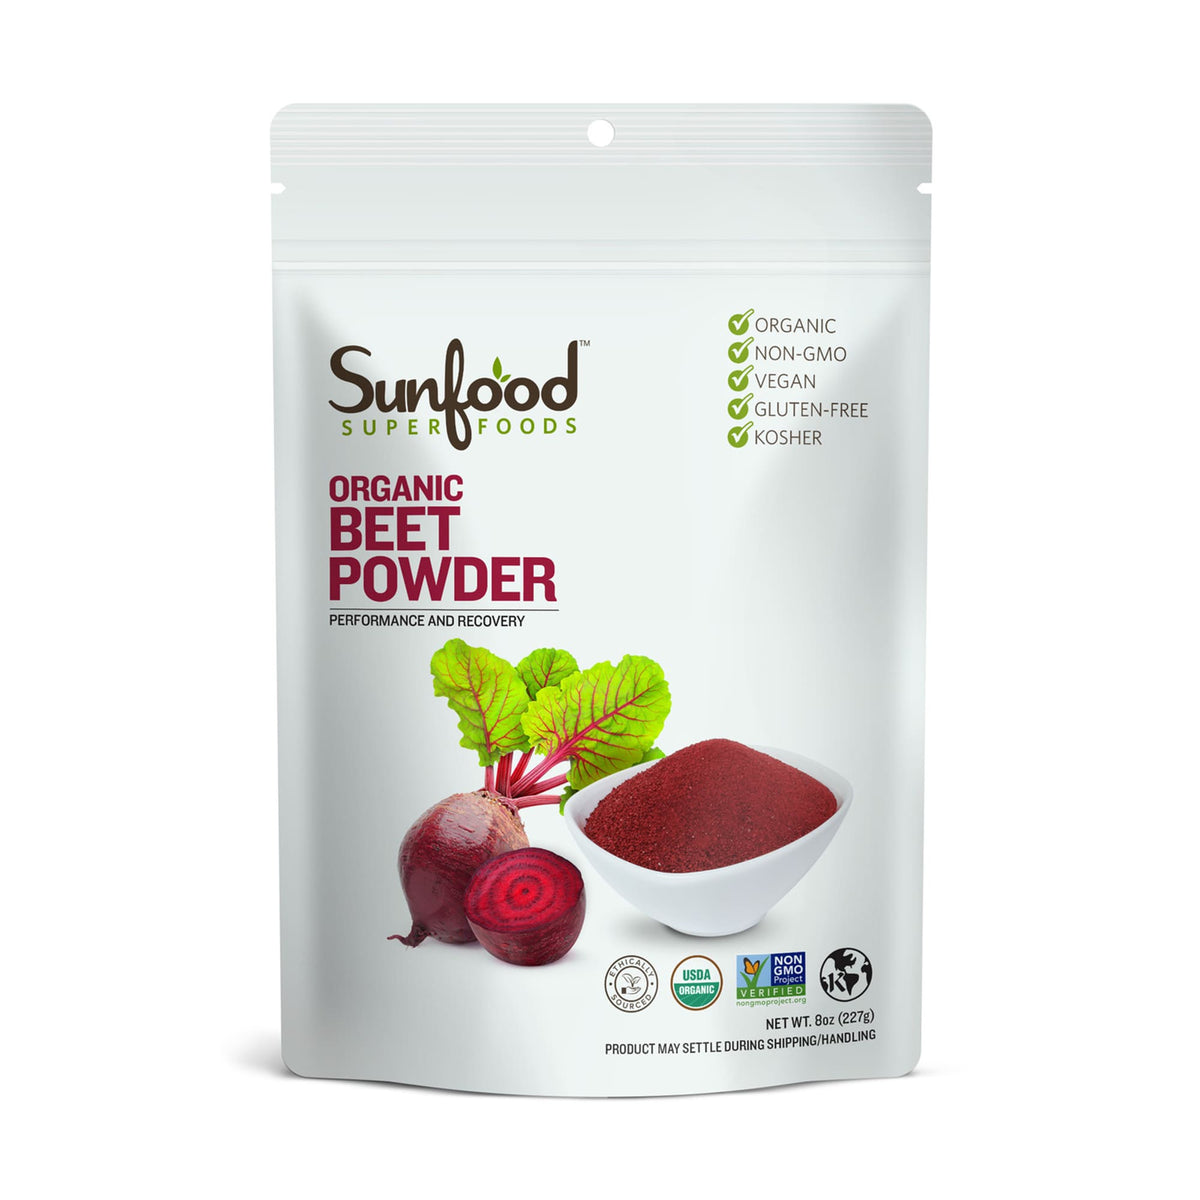 Sunfood - Organic Beet Powder Performance and Recovery Vegan Superfood 8 oz.